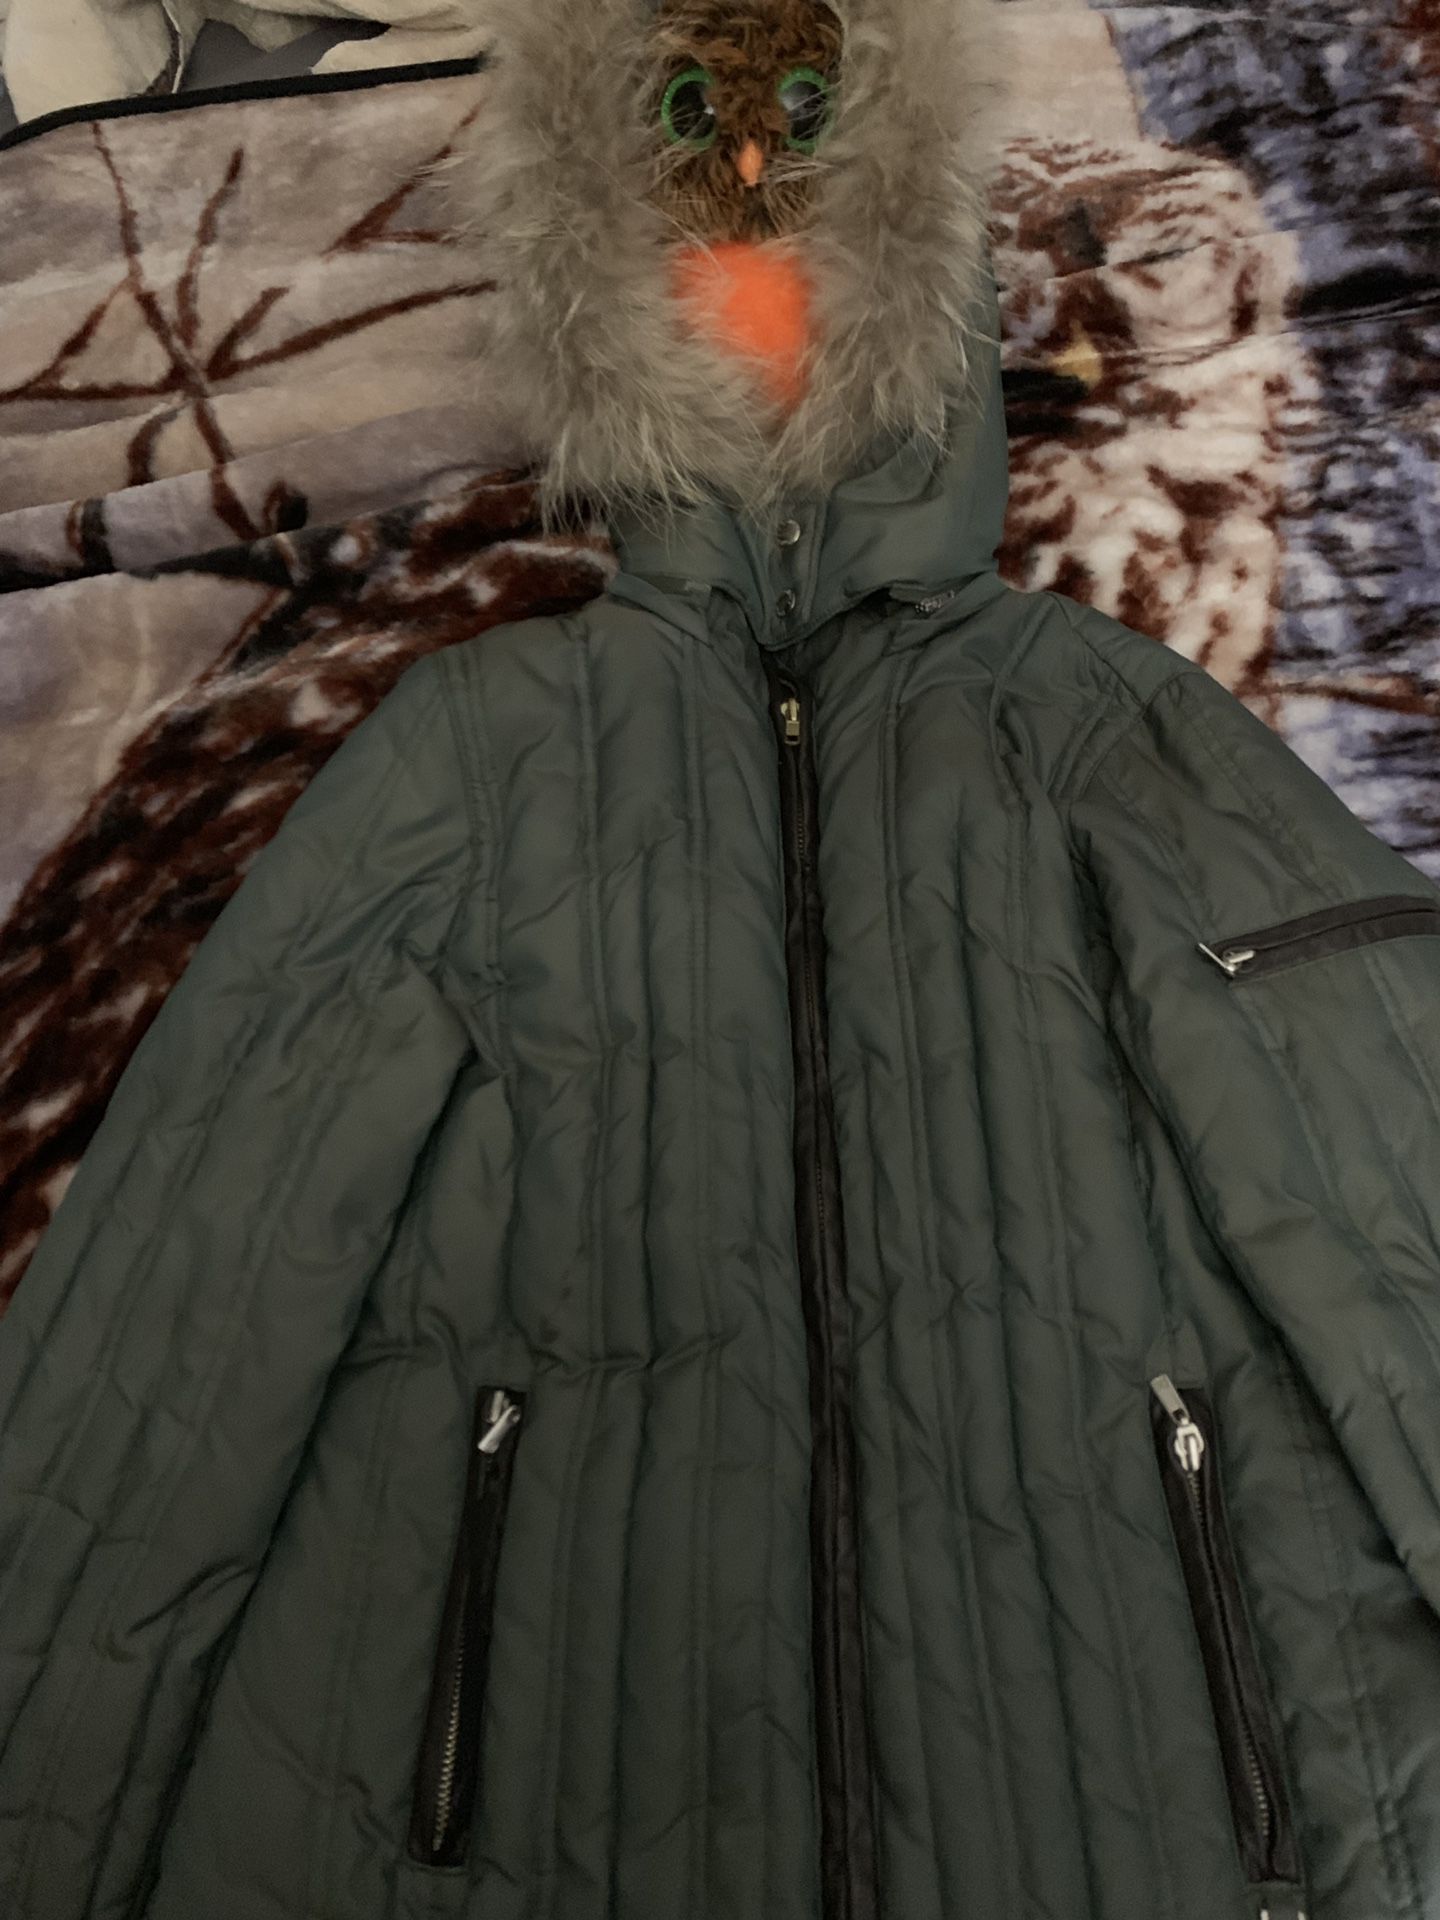 Michael Kors down jacket with Raccoon fur trimmed hood